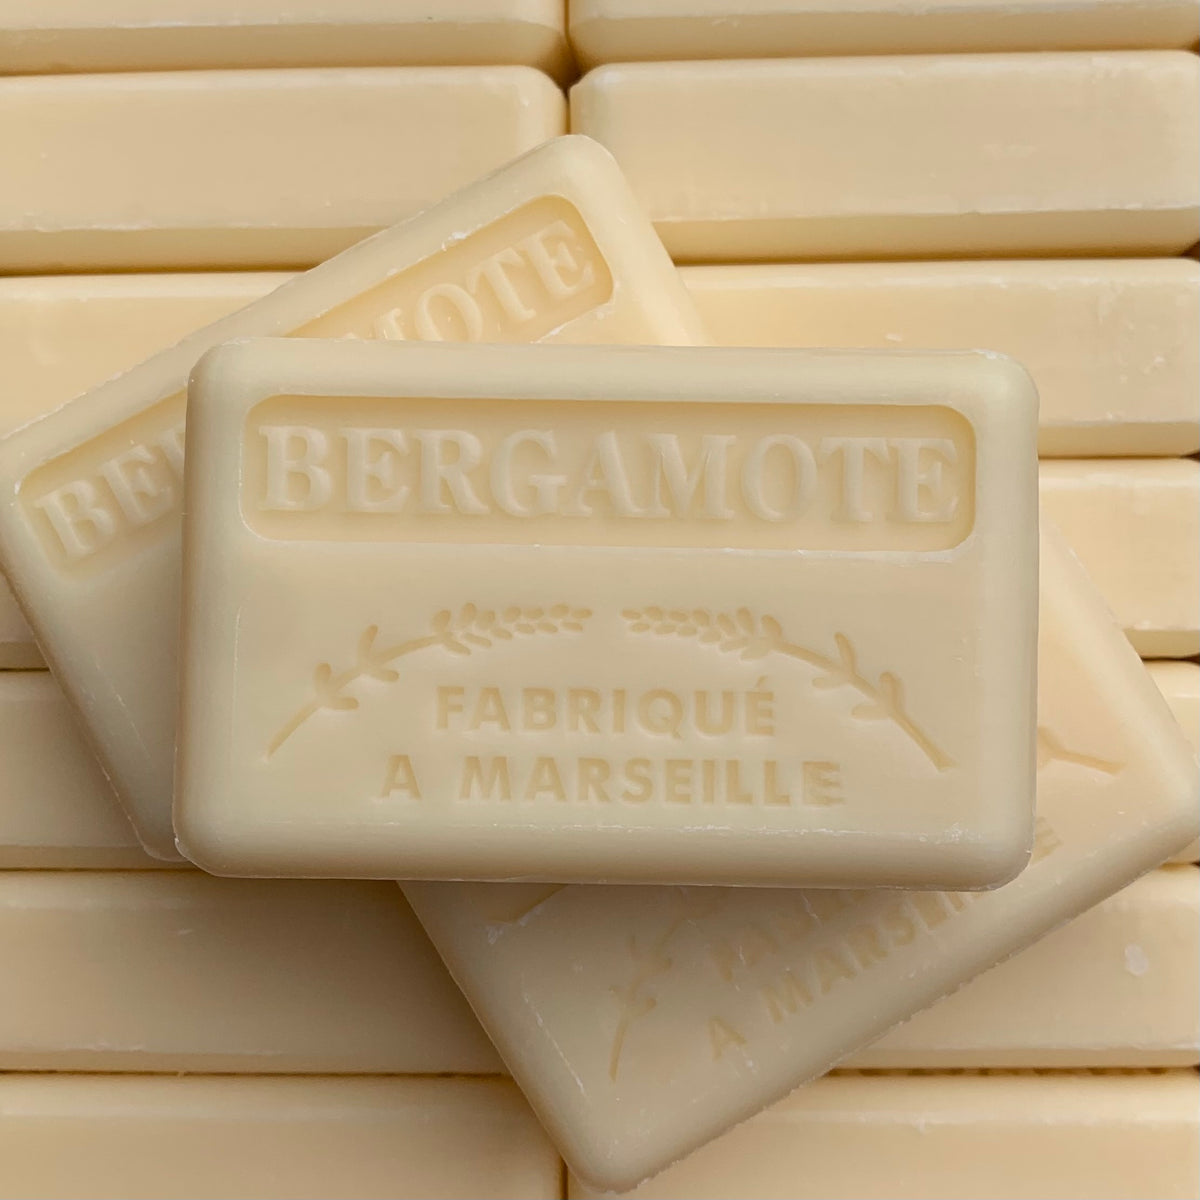 bergamot french soap bar